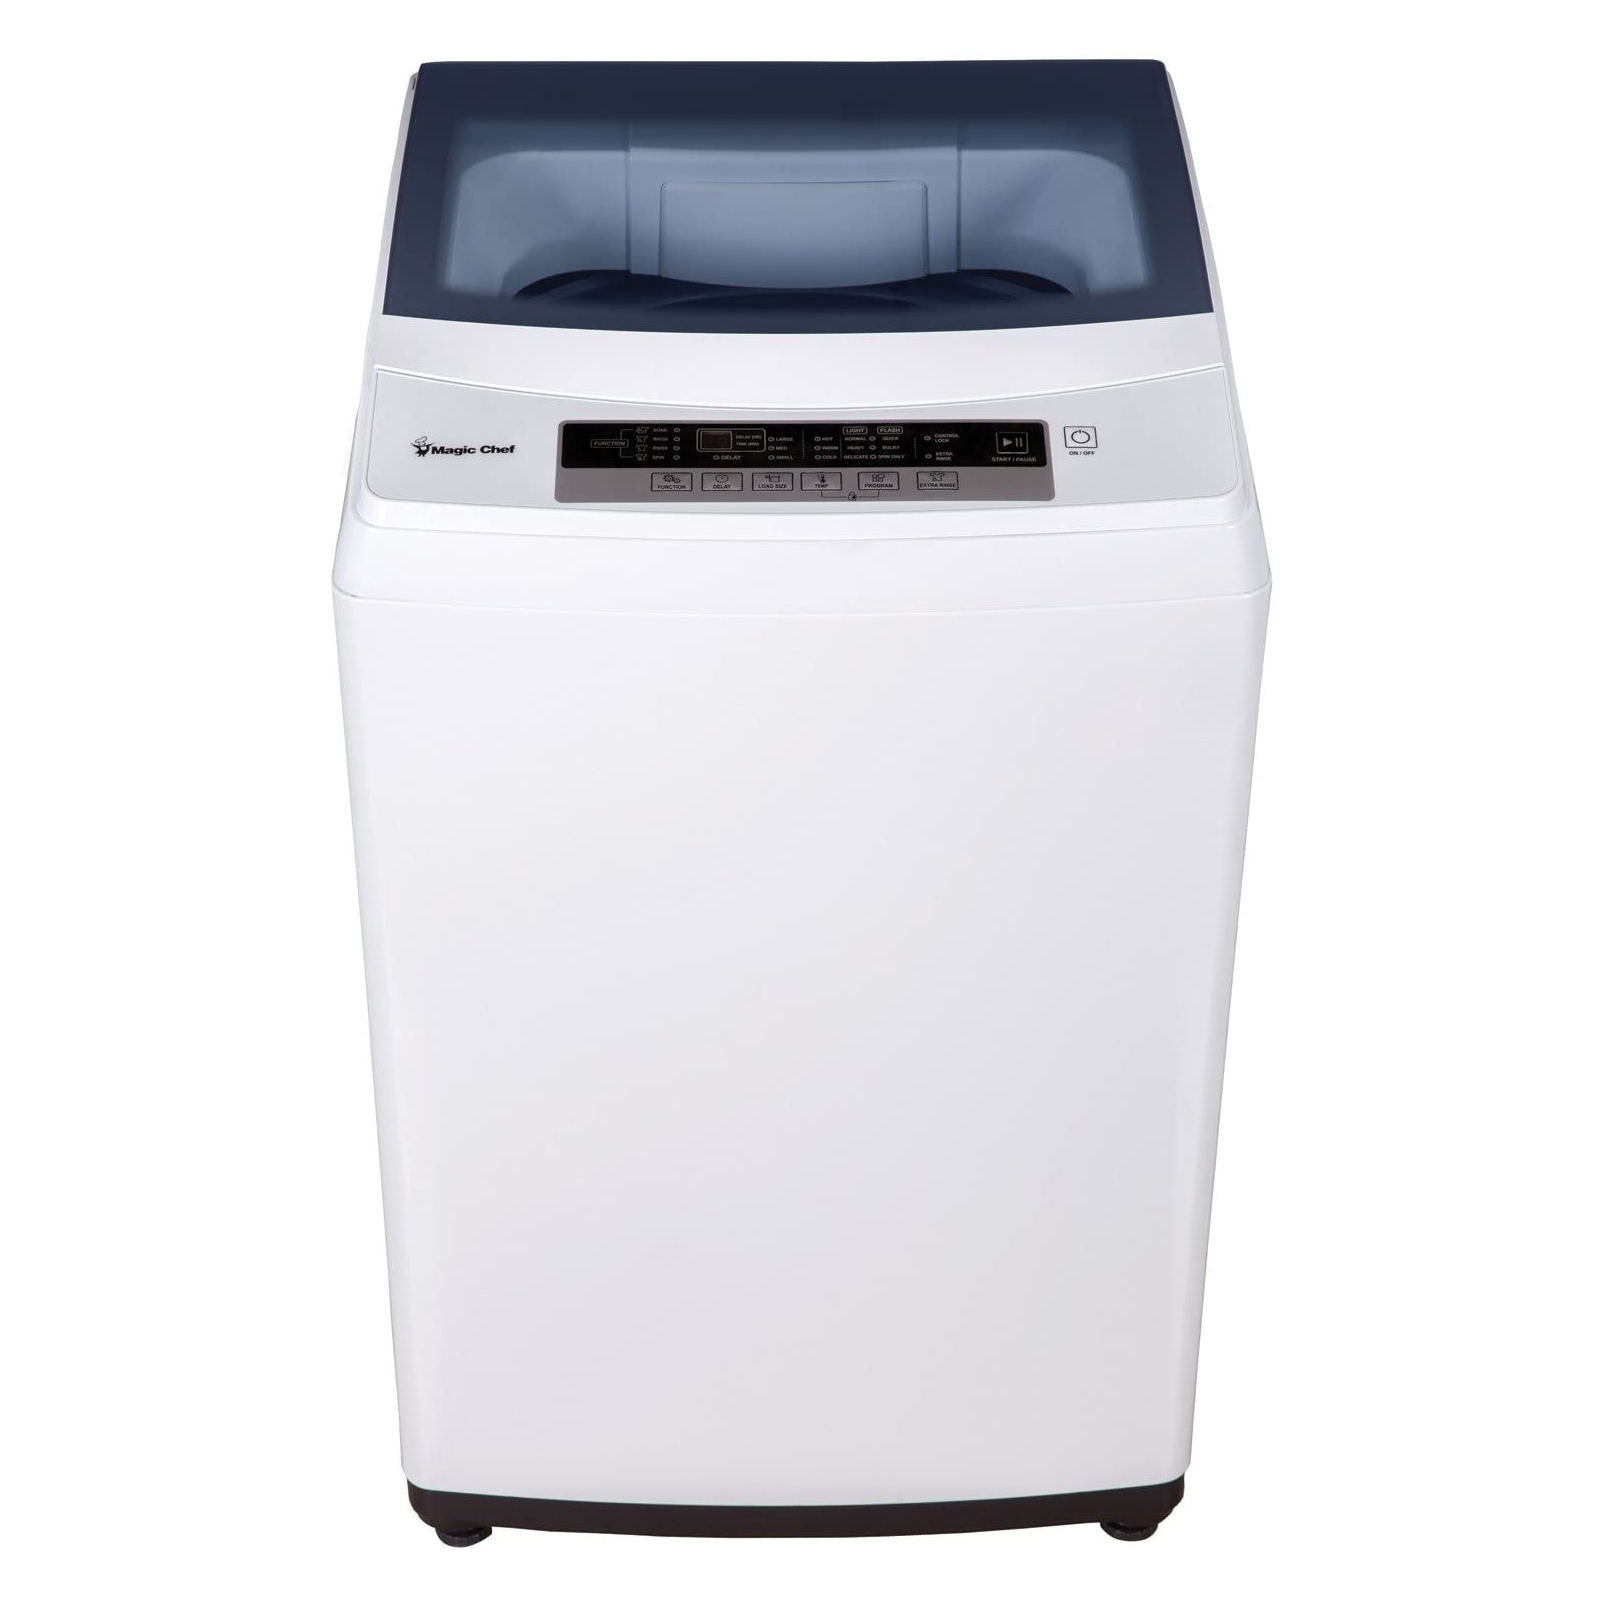 Magic Chef 2.0 Cu Ft Portable Compact Top Load Washer Washing Machine, White 665679018208 eBay